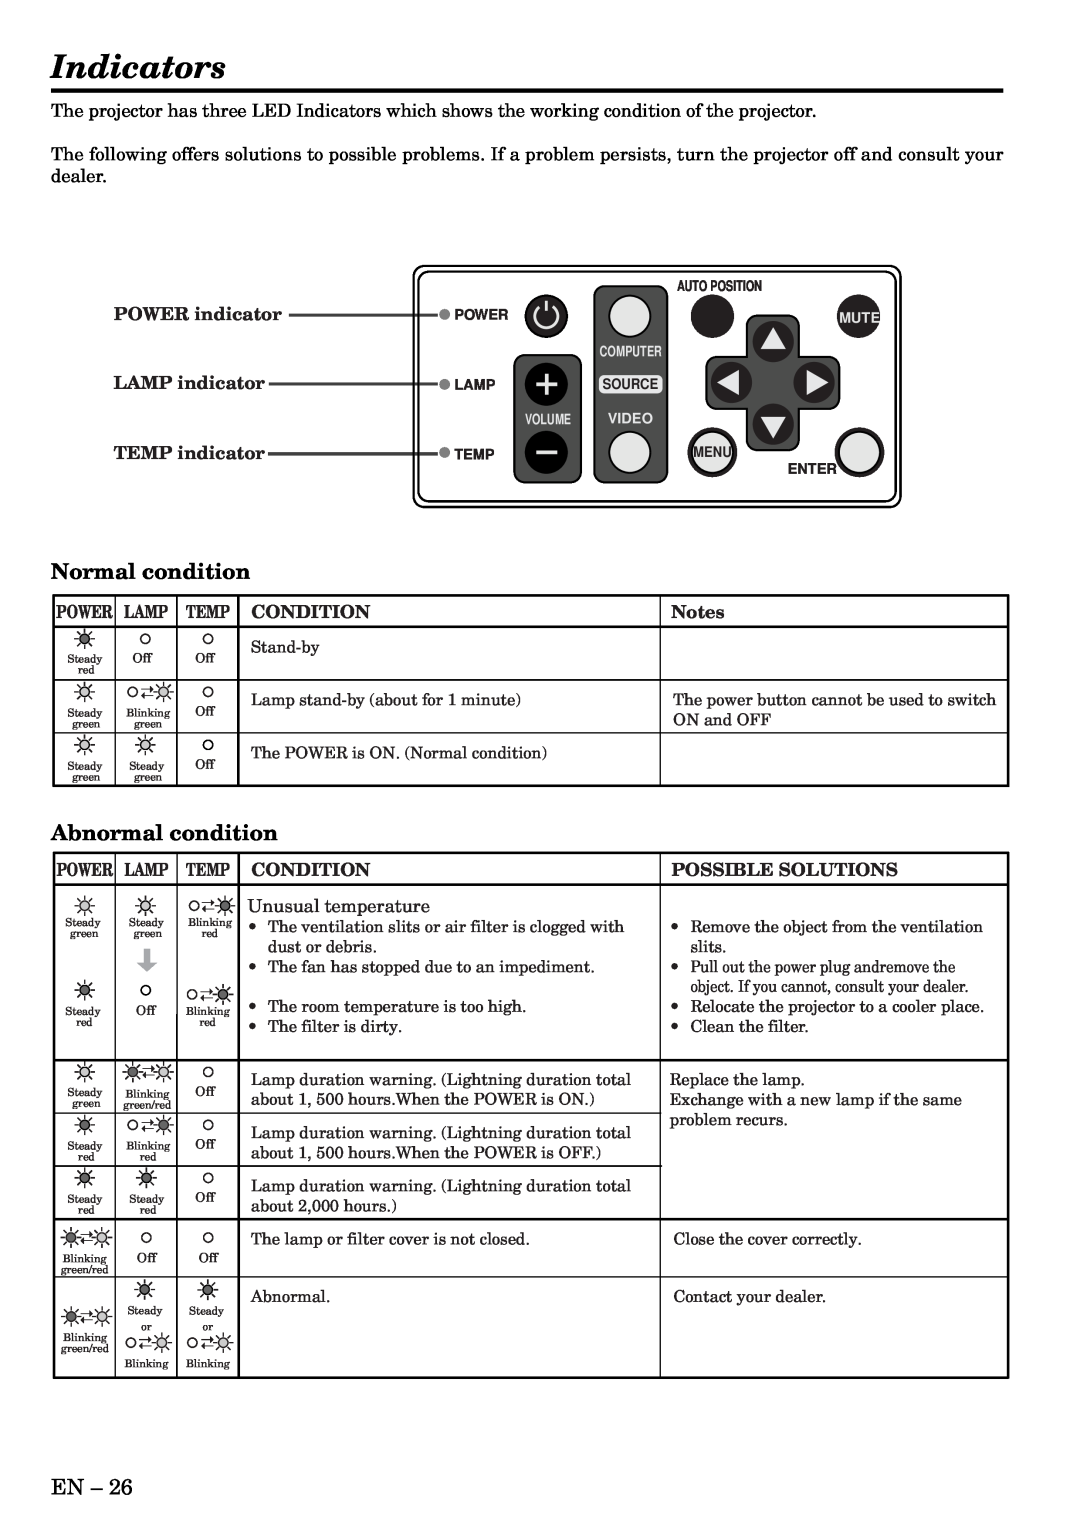 Mitsubishi Electronics X70U user manual Indicators, Normal condition, Abnormal condition 